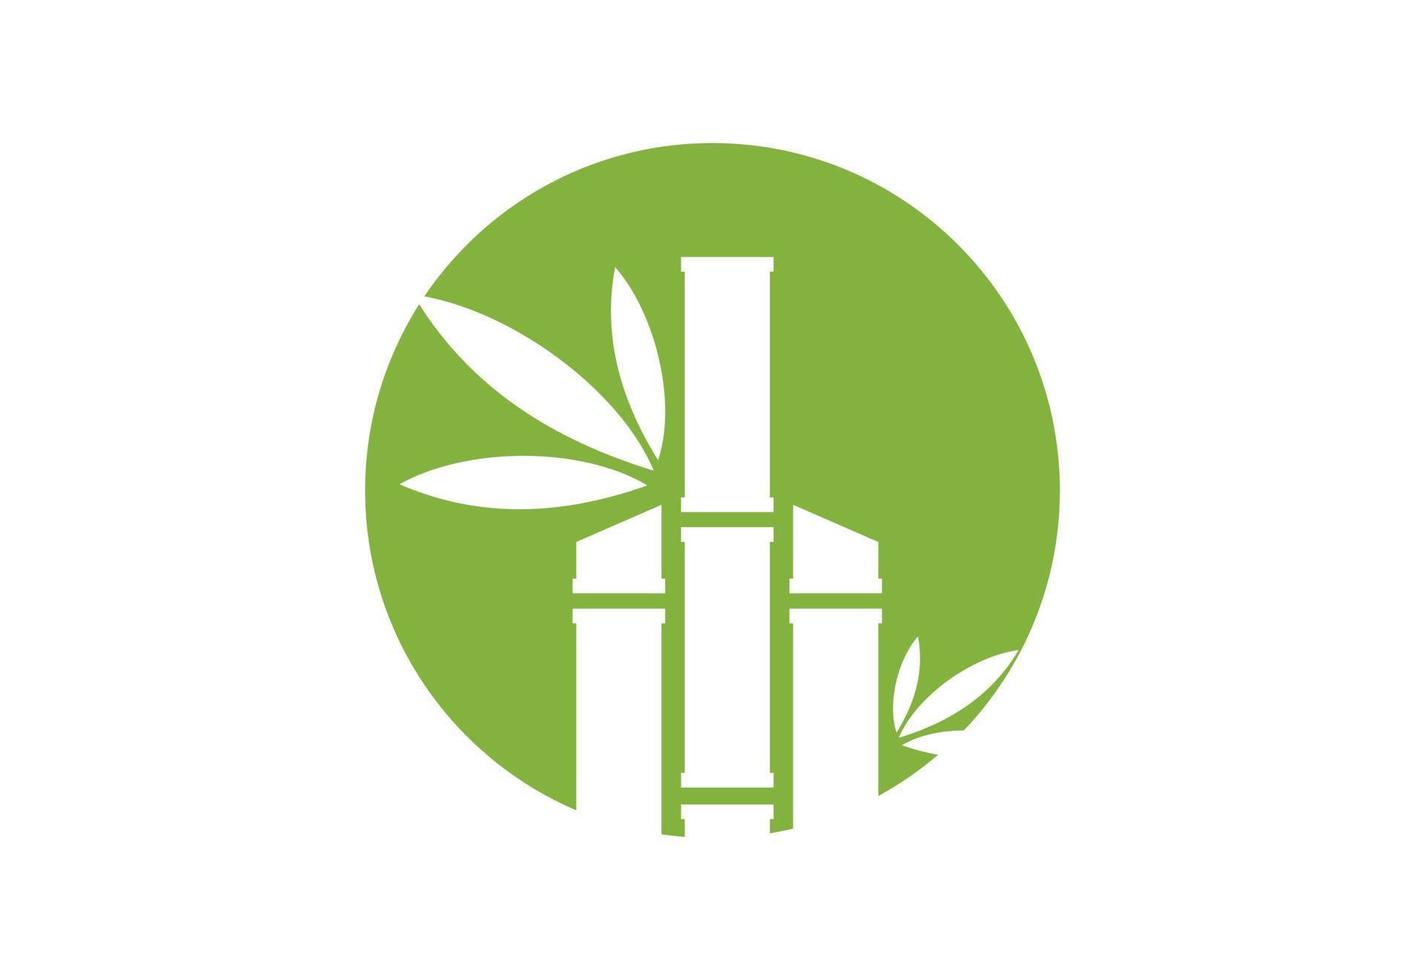 design de logotipo de jardim verde, modelo de design vetorial vetor